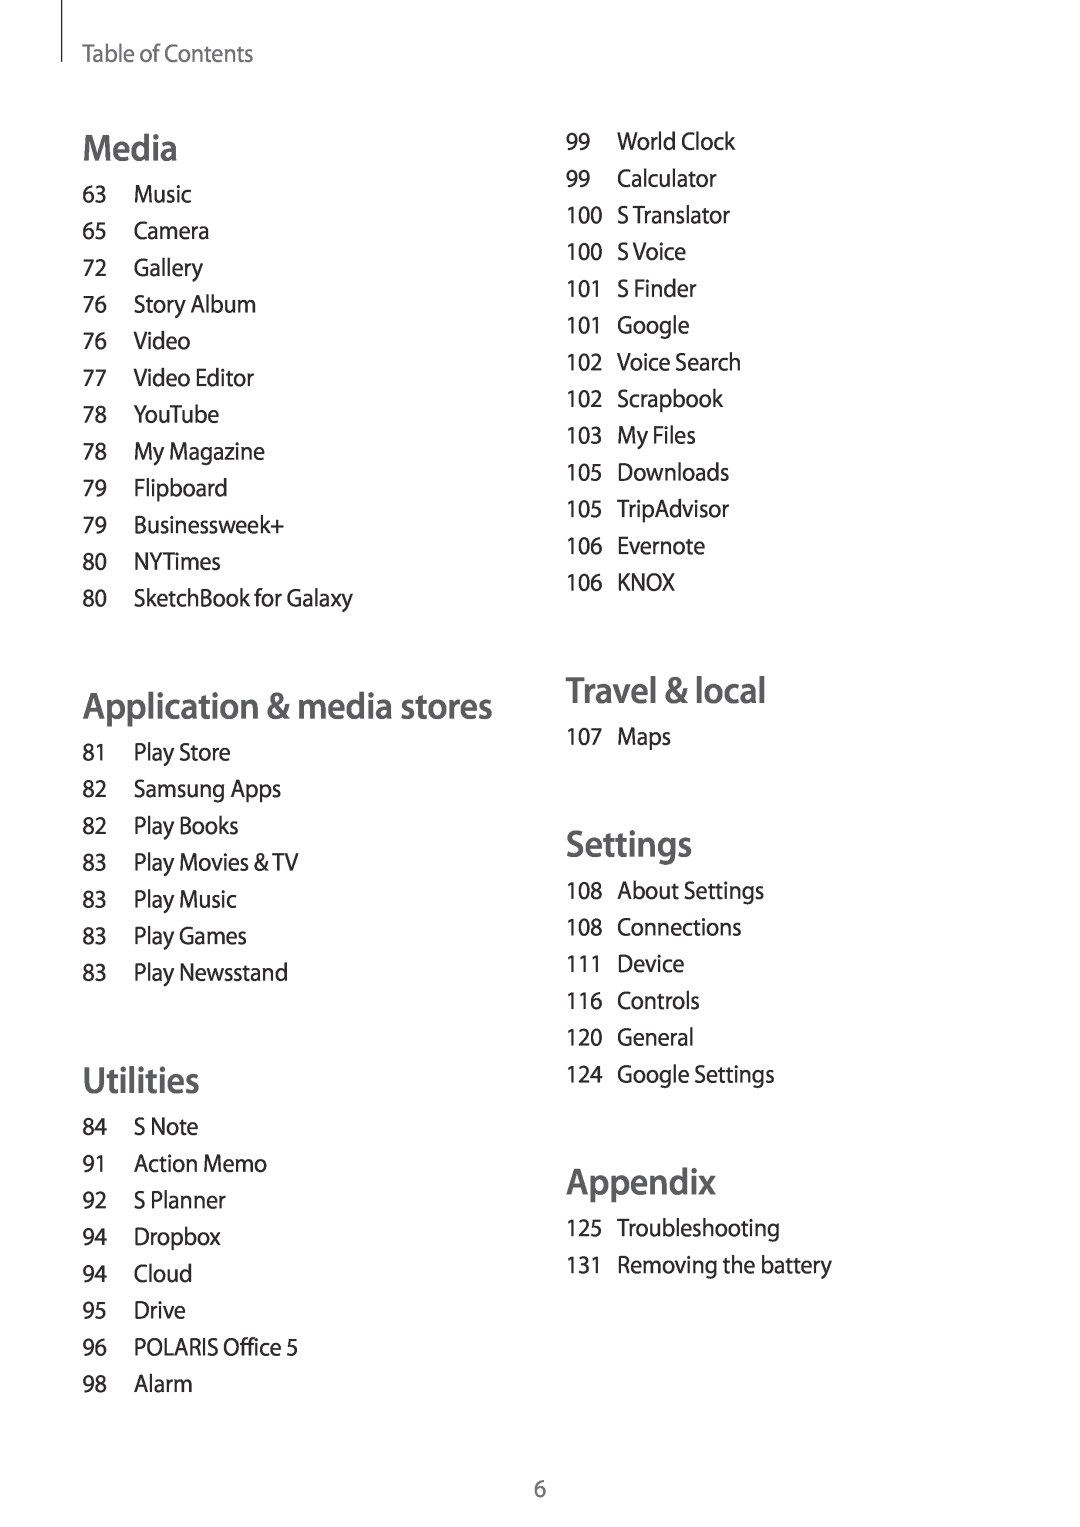 Samsung SM-P6000ZWAEUR Media, Utilities, Travel & local, Settings, Appendix, Table of Contents, Application & media stores 